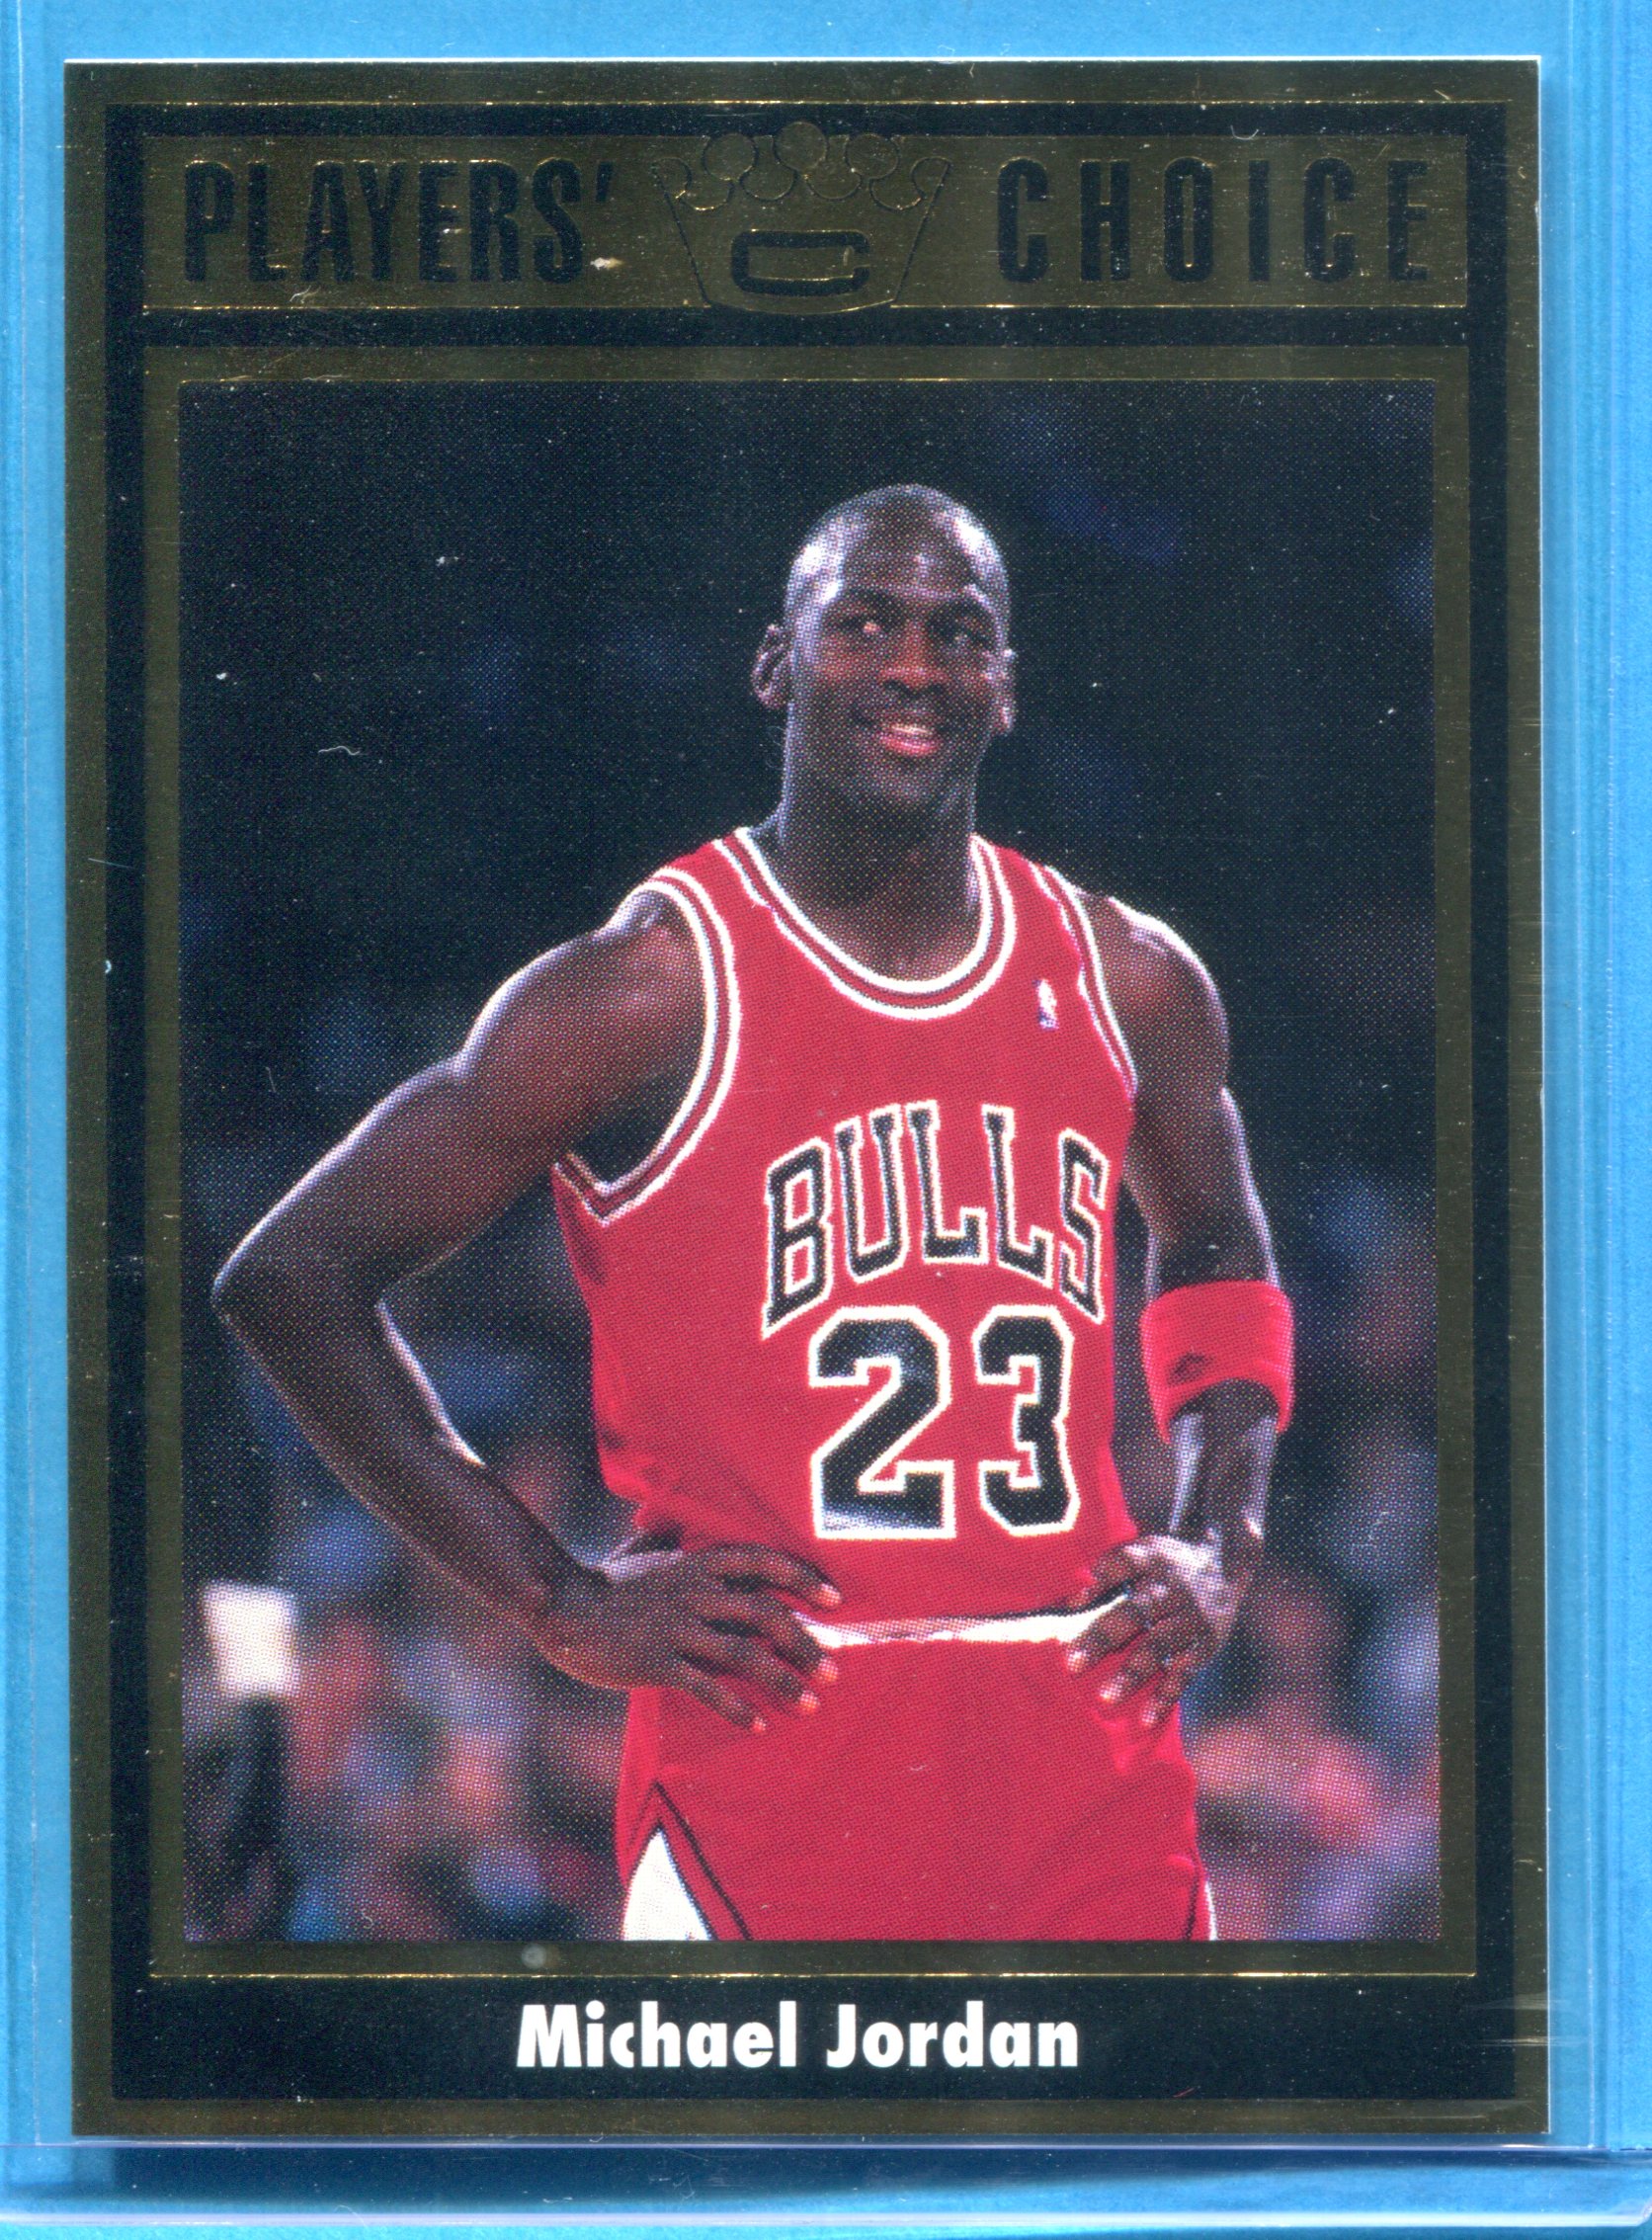 1993 Cartwright's Gold Card #7 Michael Jordan